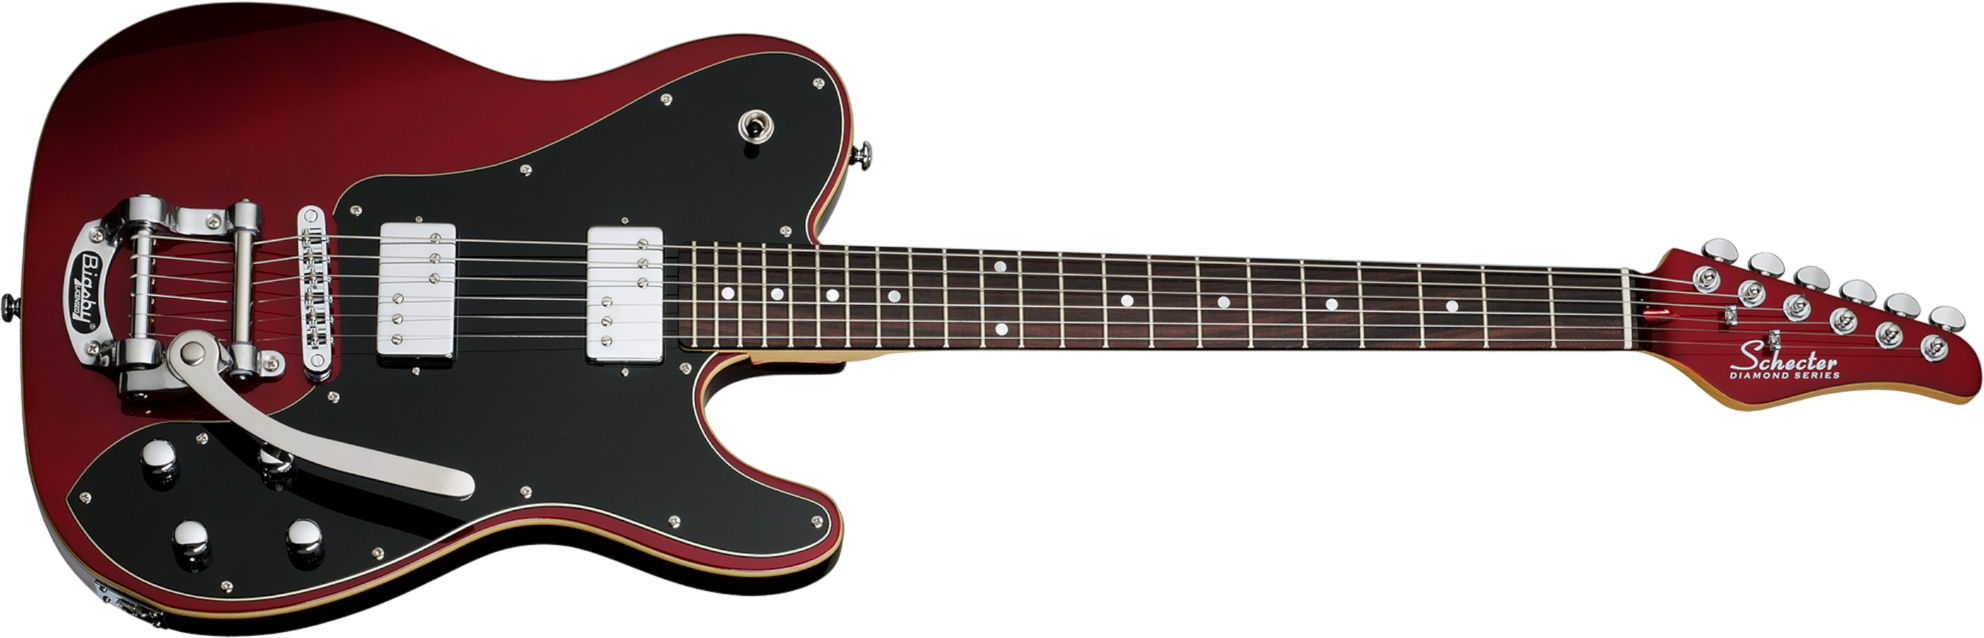 Schecter Pt Fastback Ii B Bigsby 2h Trem Bigsby Rw - Metallic Red - Guitarra eléctrica con forma de tel - Main picture